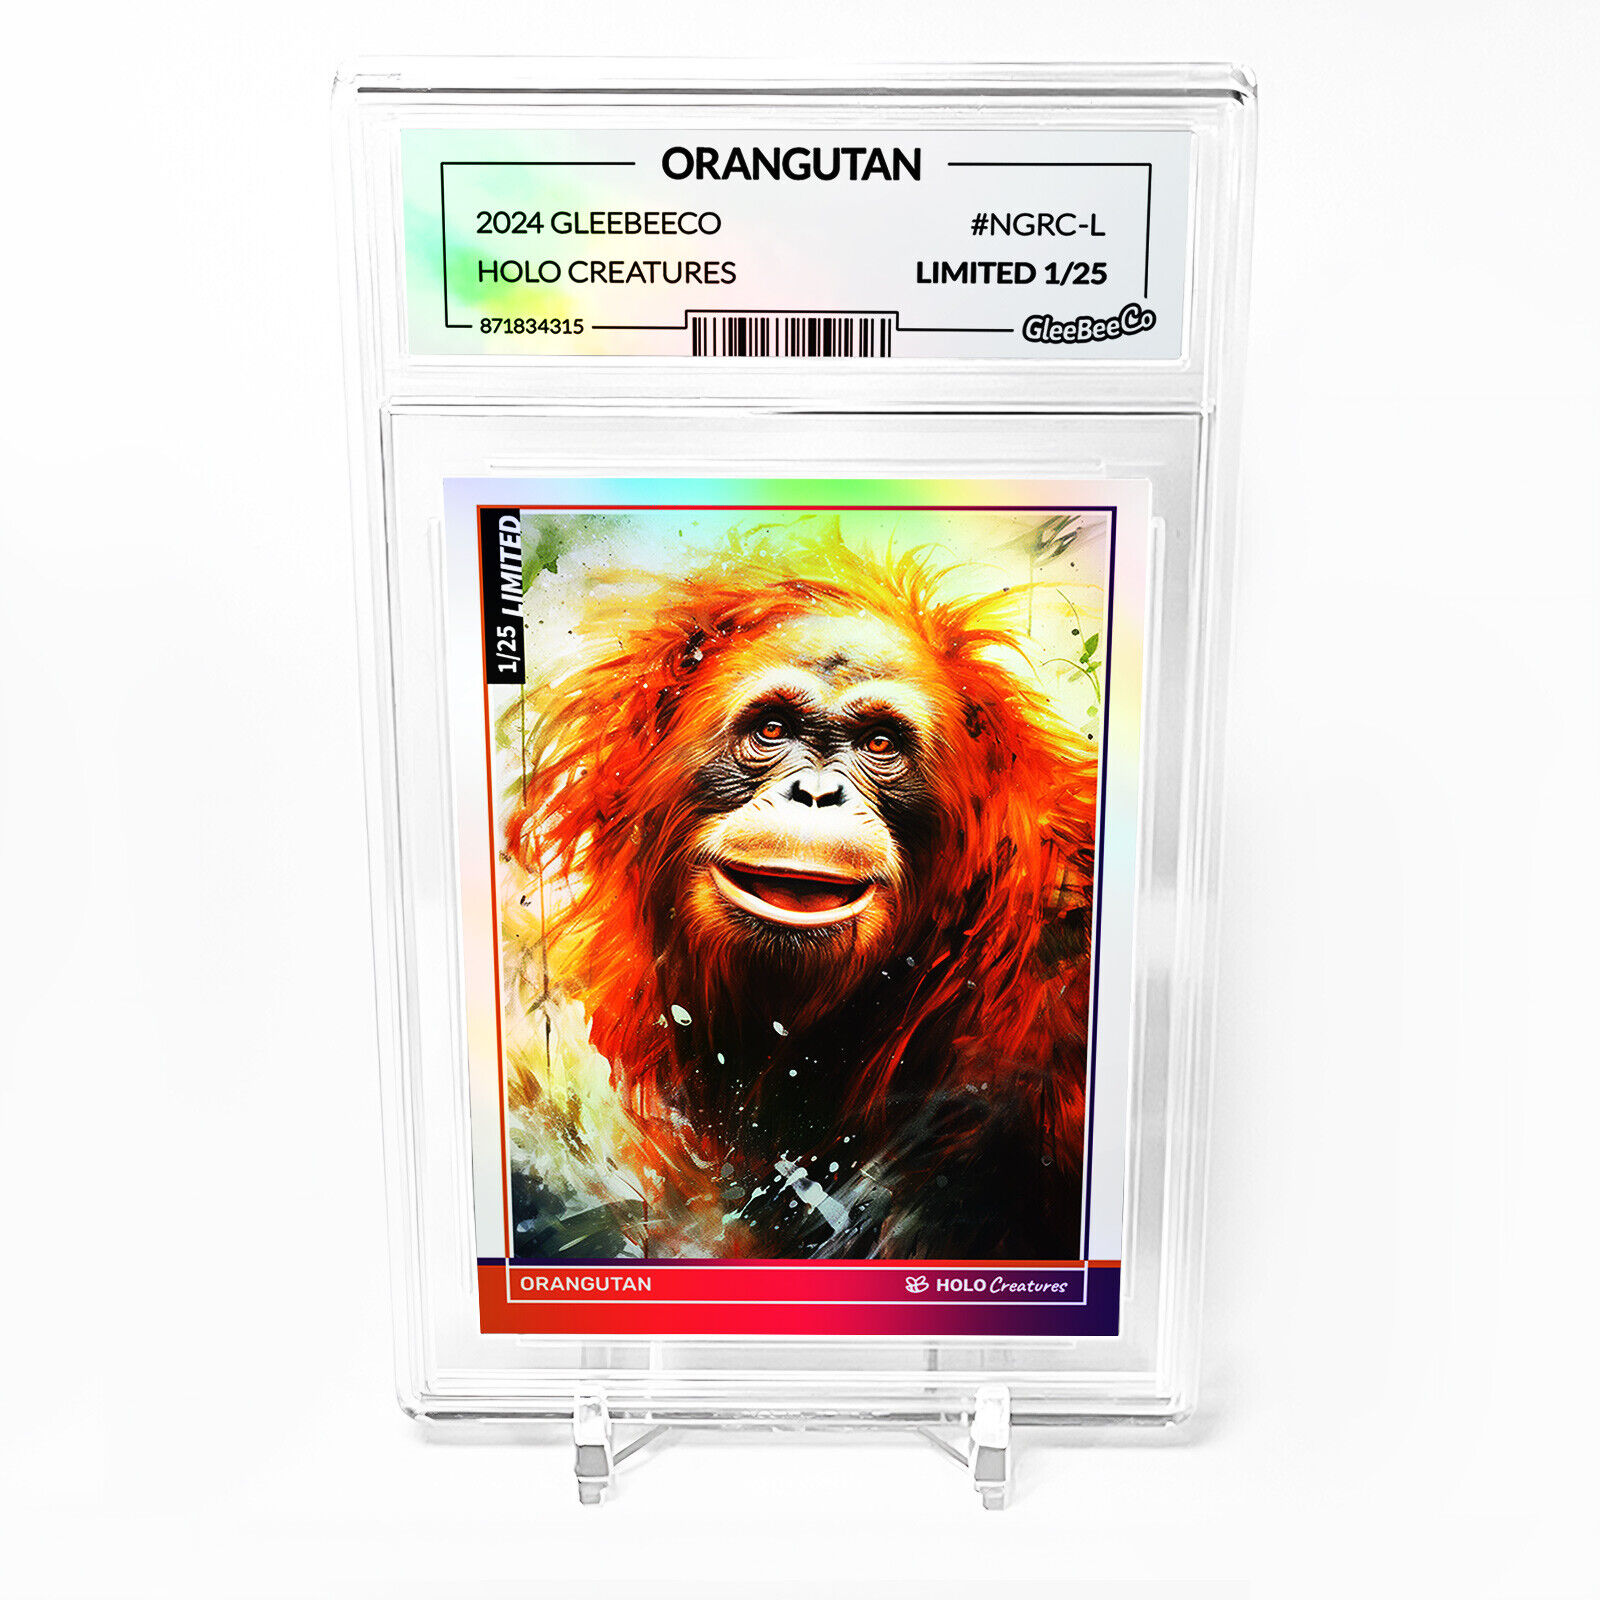 ORANGUTAN Card 2024 GleeBeeCo Holo Creatures Great Ape #NGRC-L /25 Made STUNNING